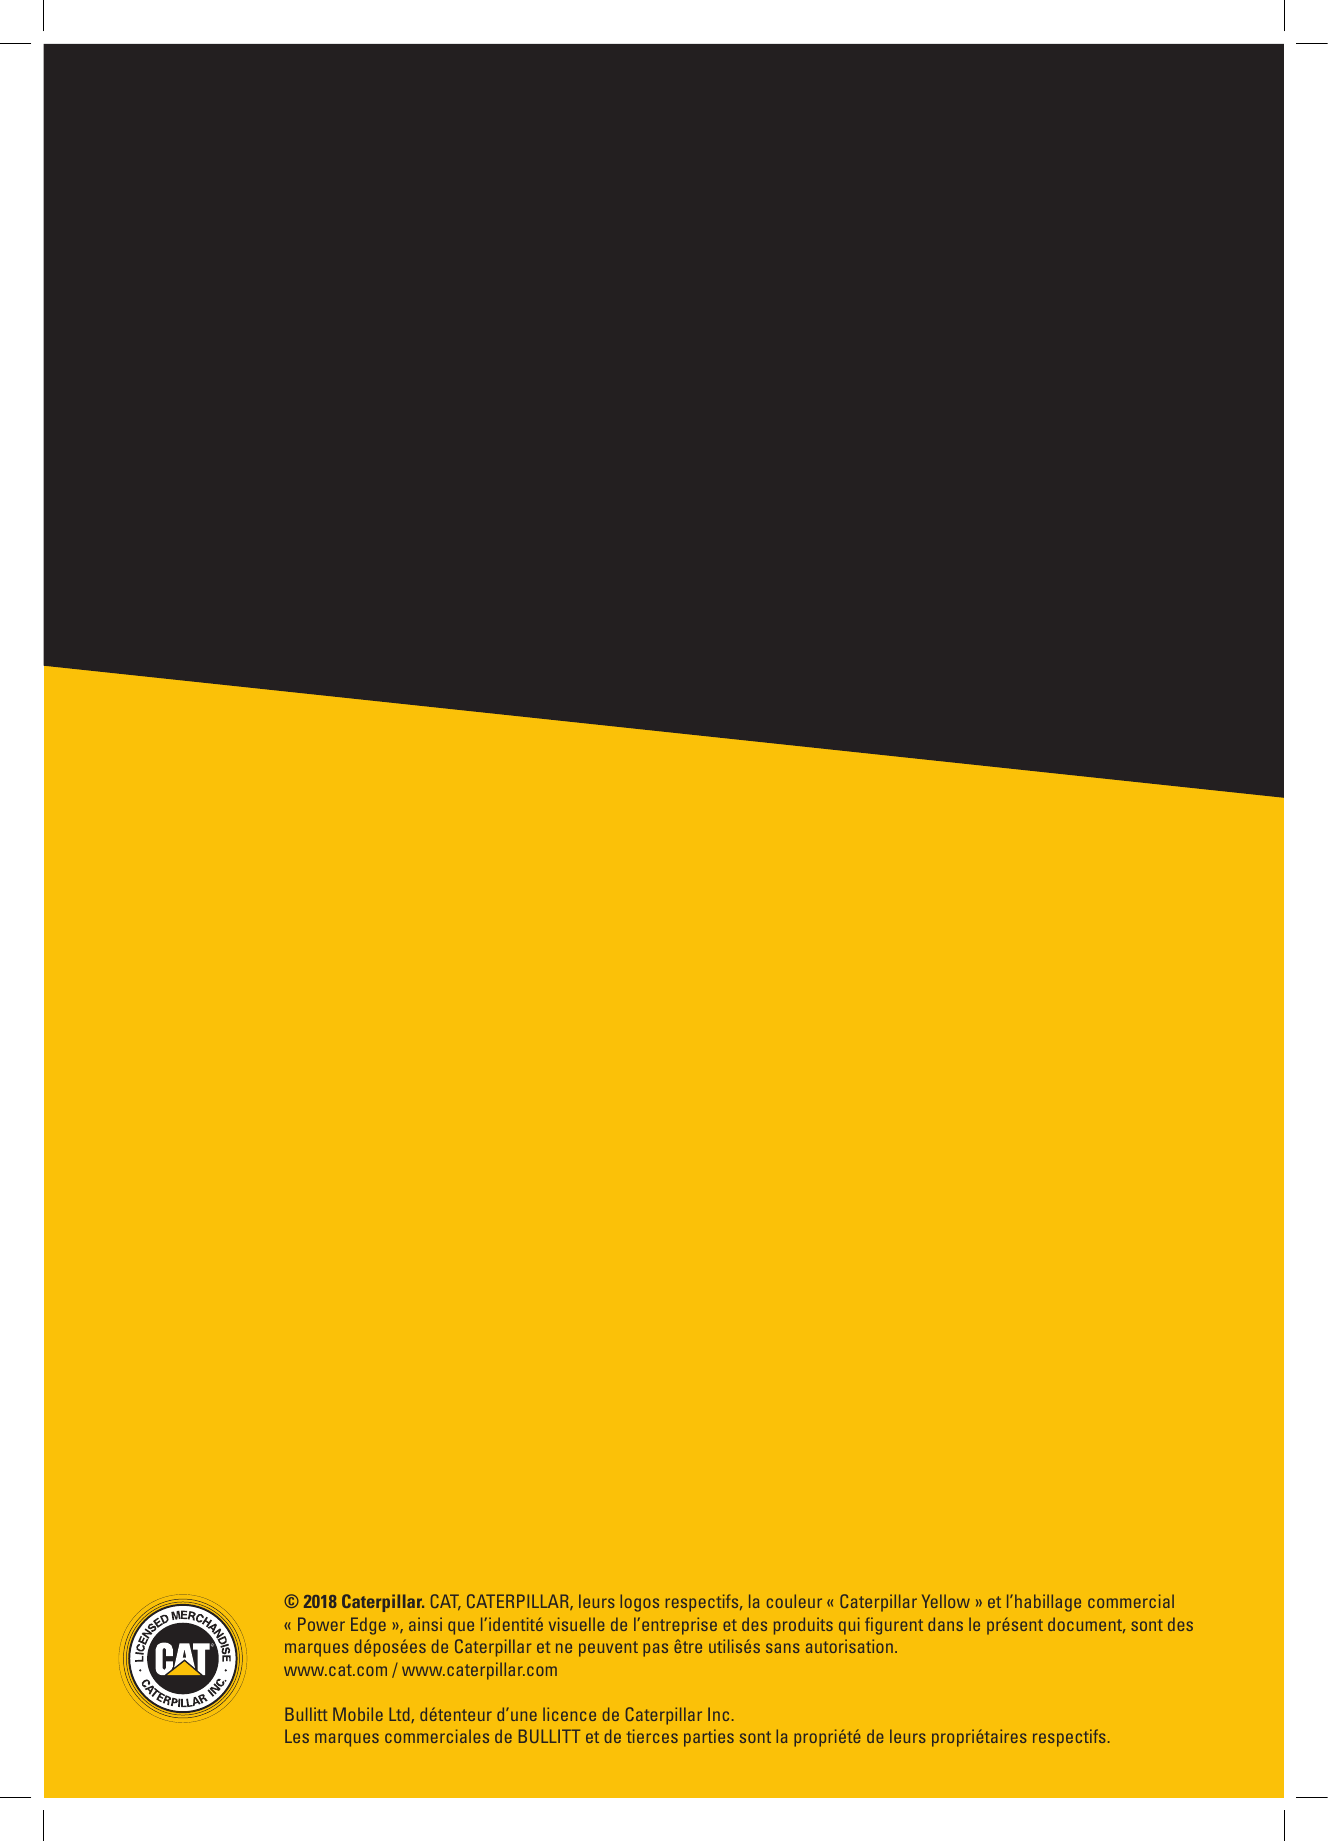 © 2018 Caterpillar. CAT, CATERPILLAR, leurs logos respectifs, la couleur « Caterpillar Yellow » et l’habillage commercial« Power